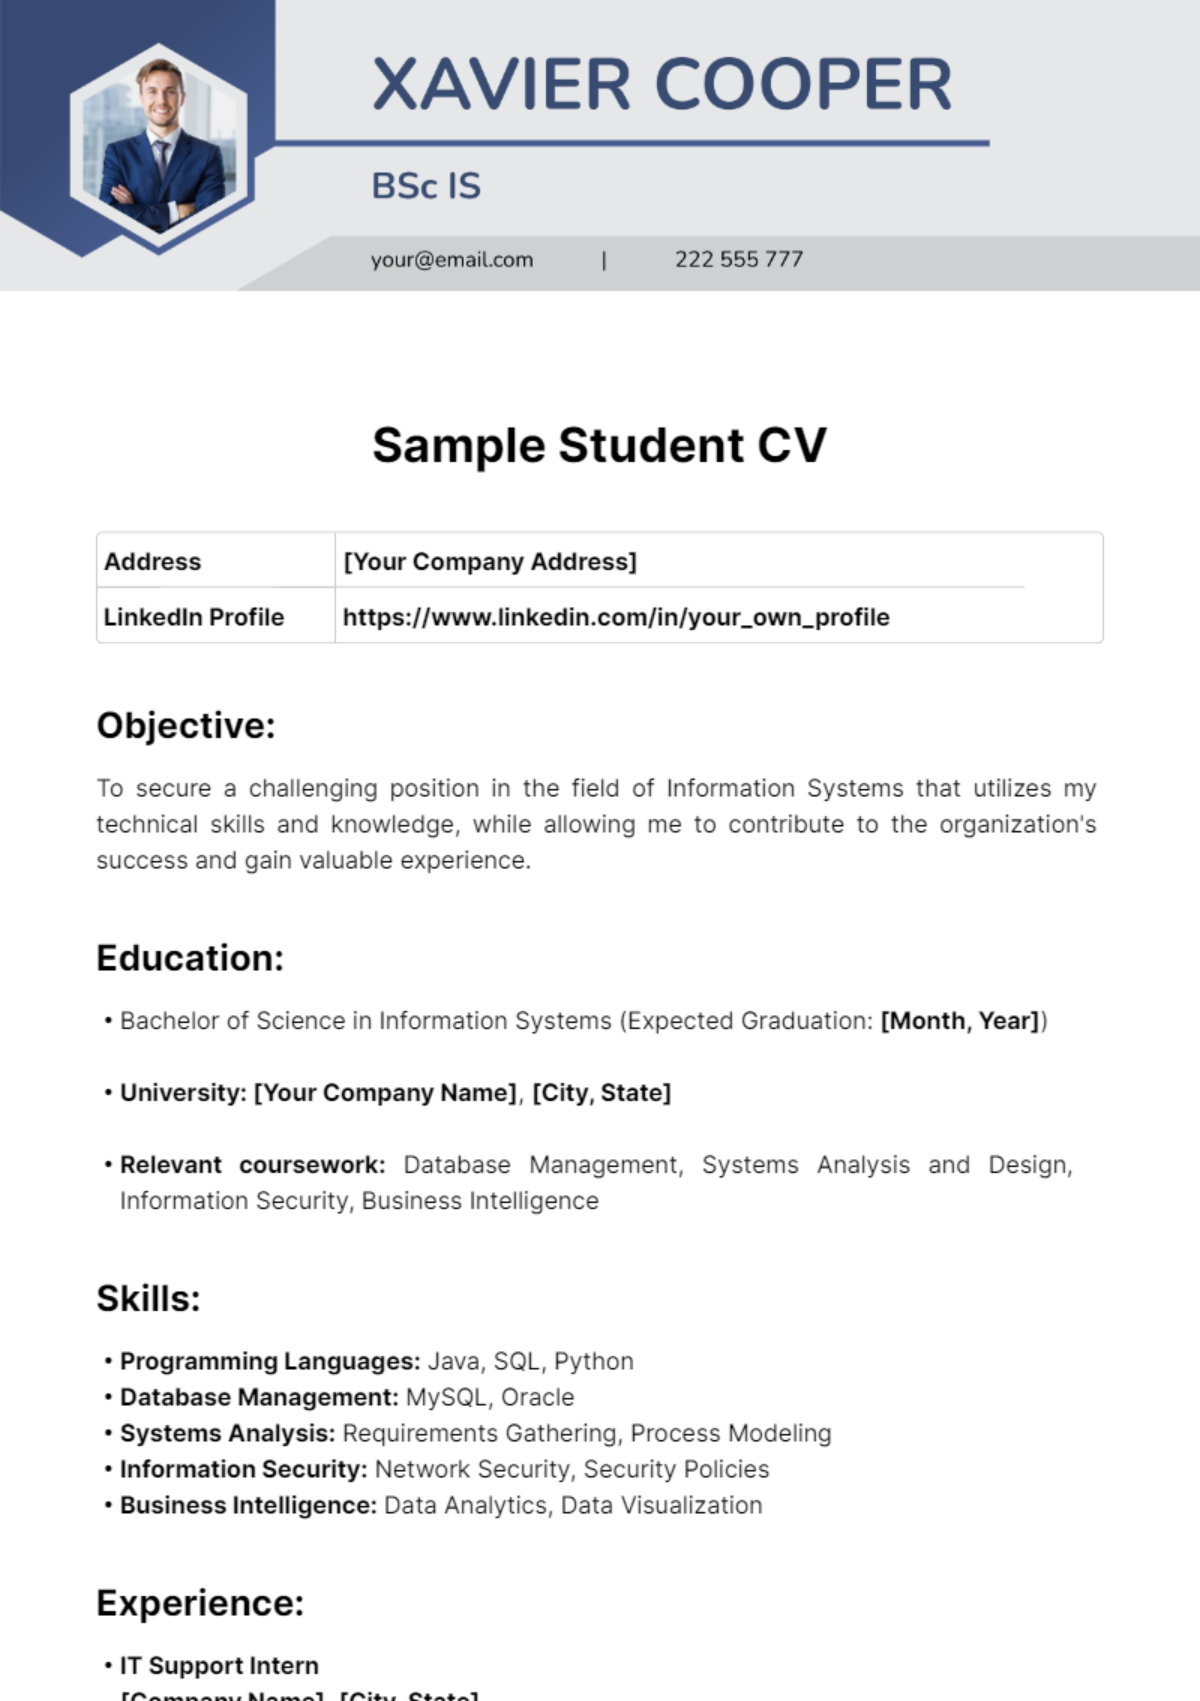 Sample Student CV Template